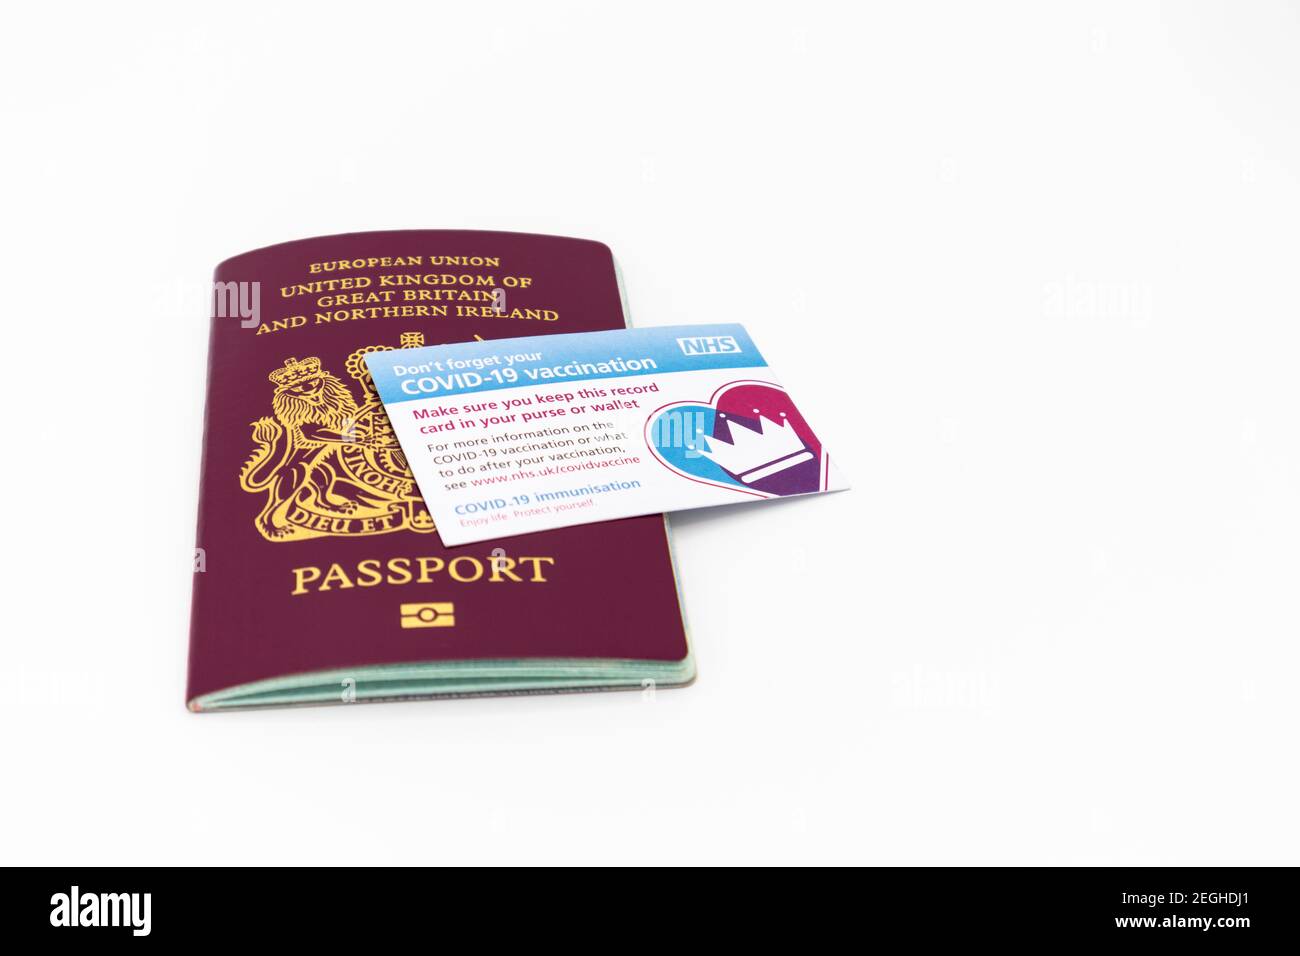 UK passport and covid 19 vaccination card, uk Stock Photo